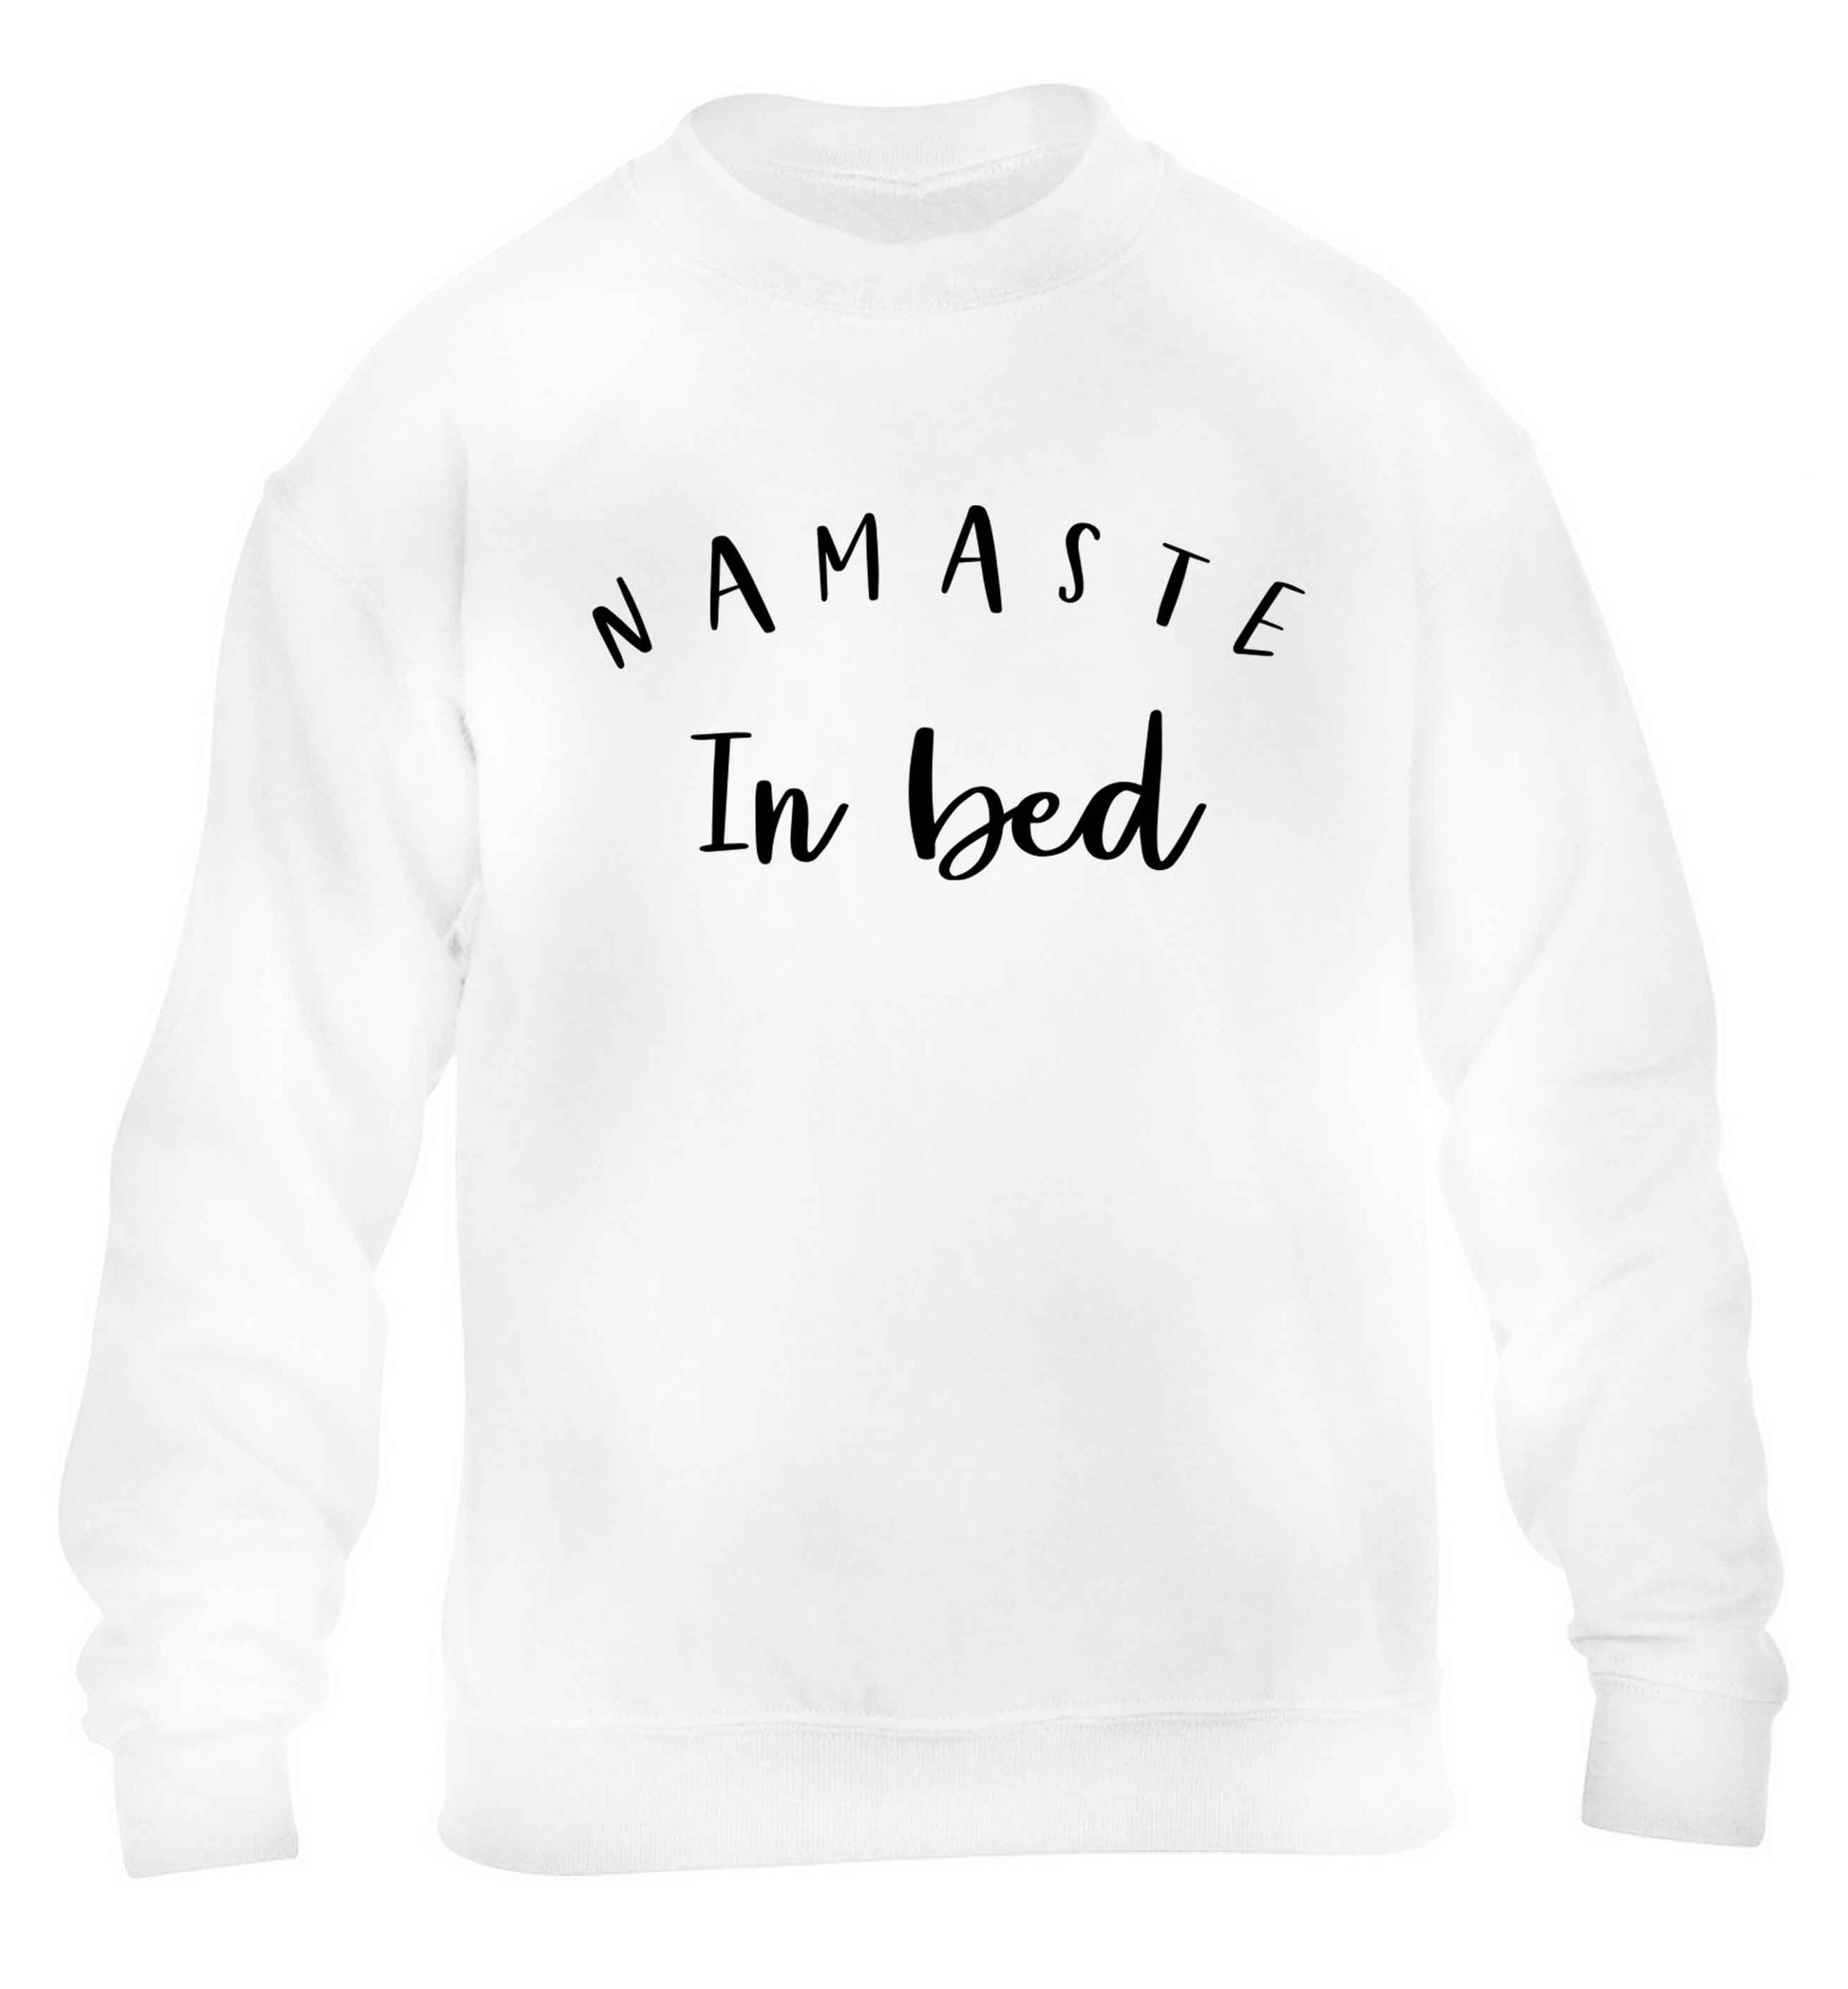 Namaste in bed children's white sweater 12-13 Years